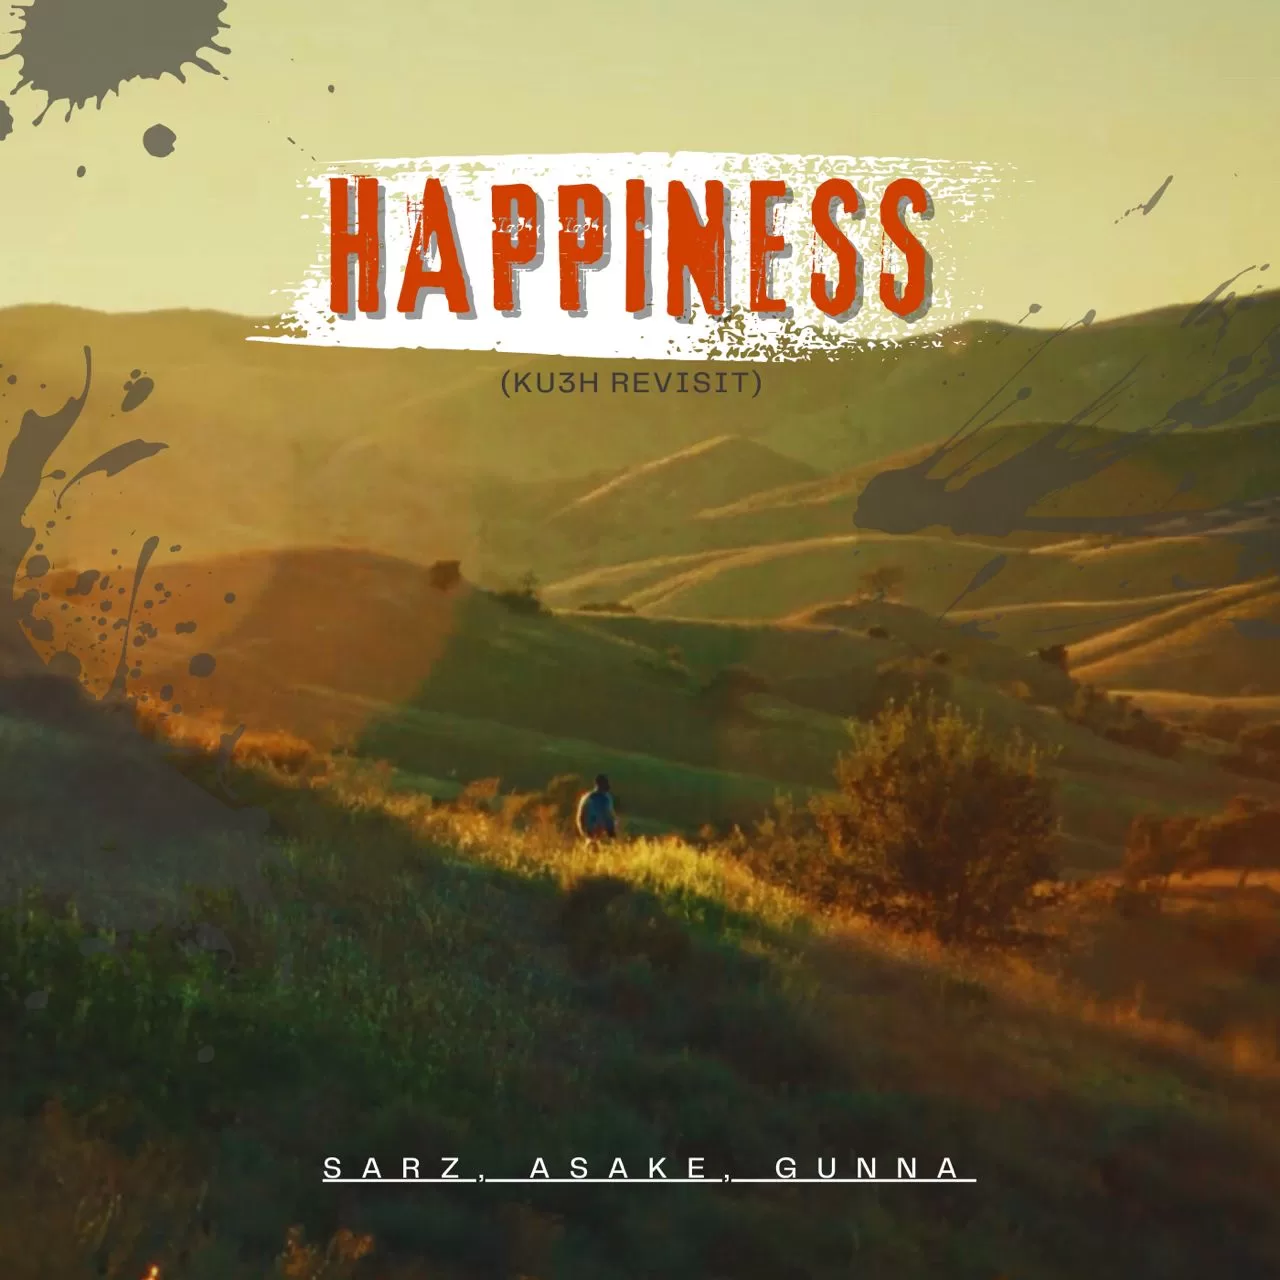 Sarz, Asake & Gunna - Happiness (Kush Revisit) Mp3 Download